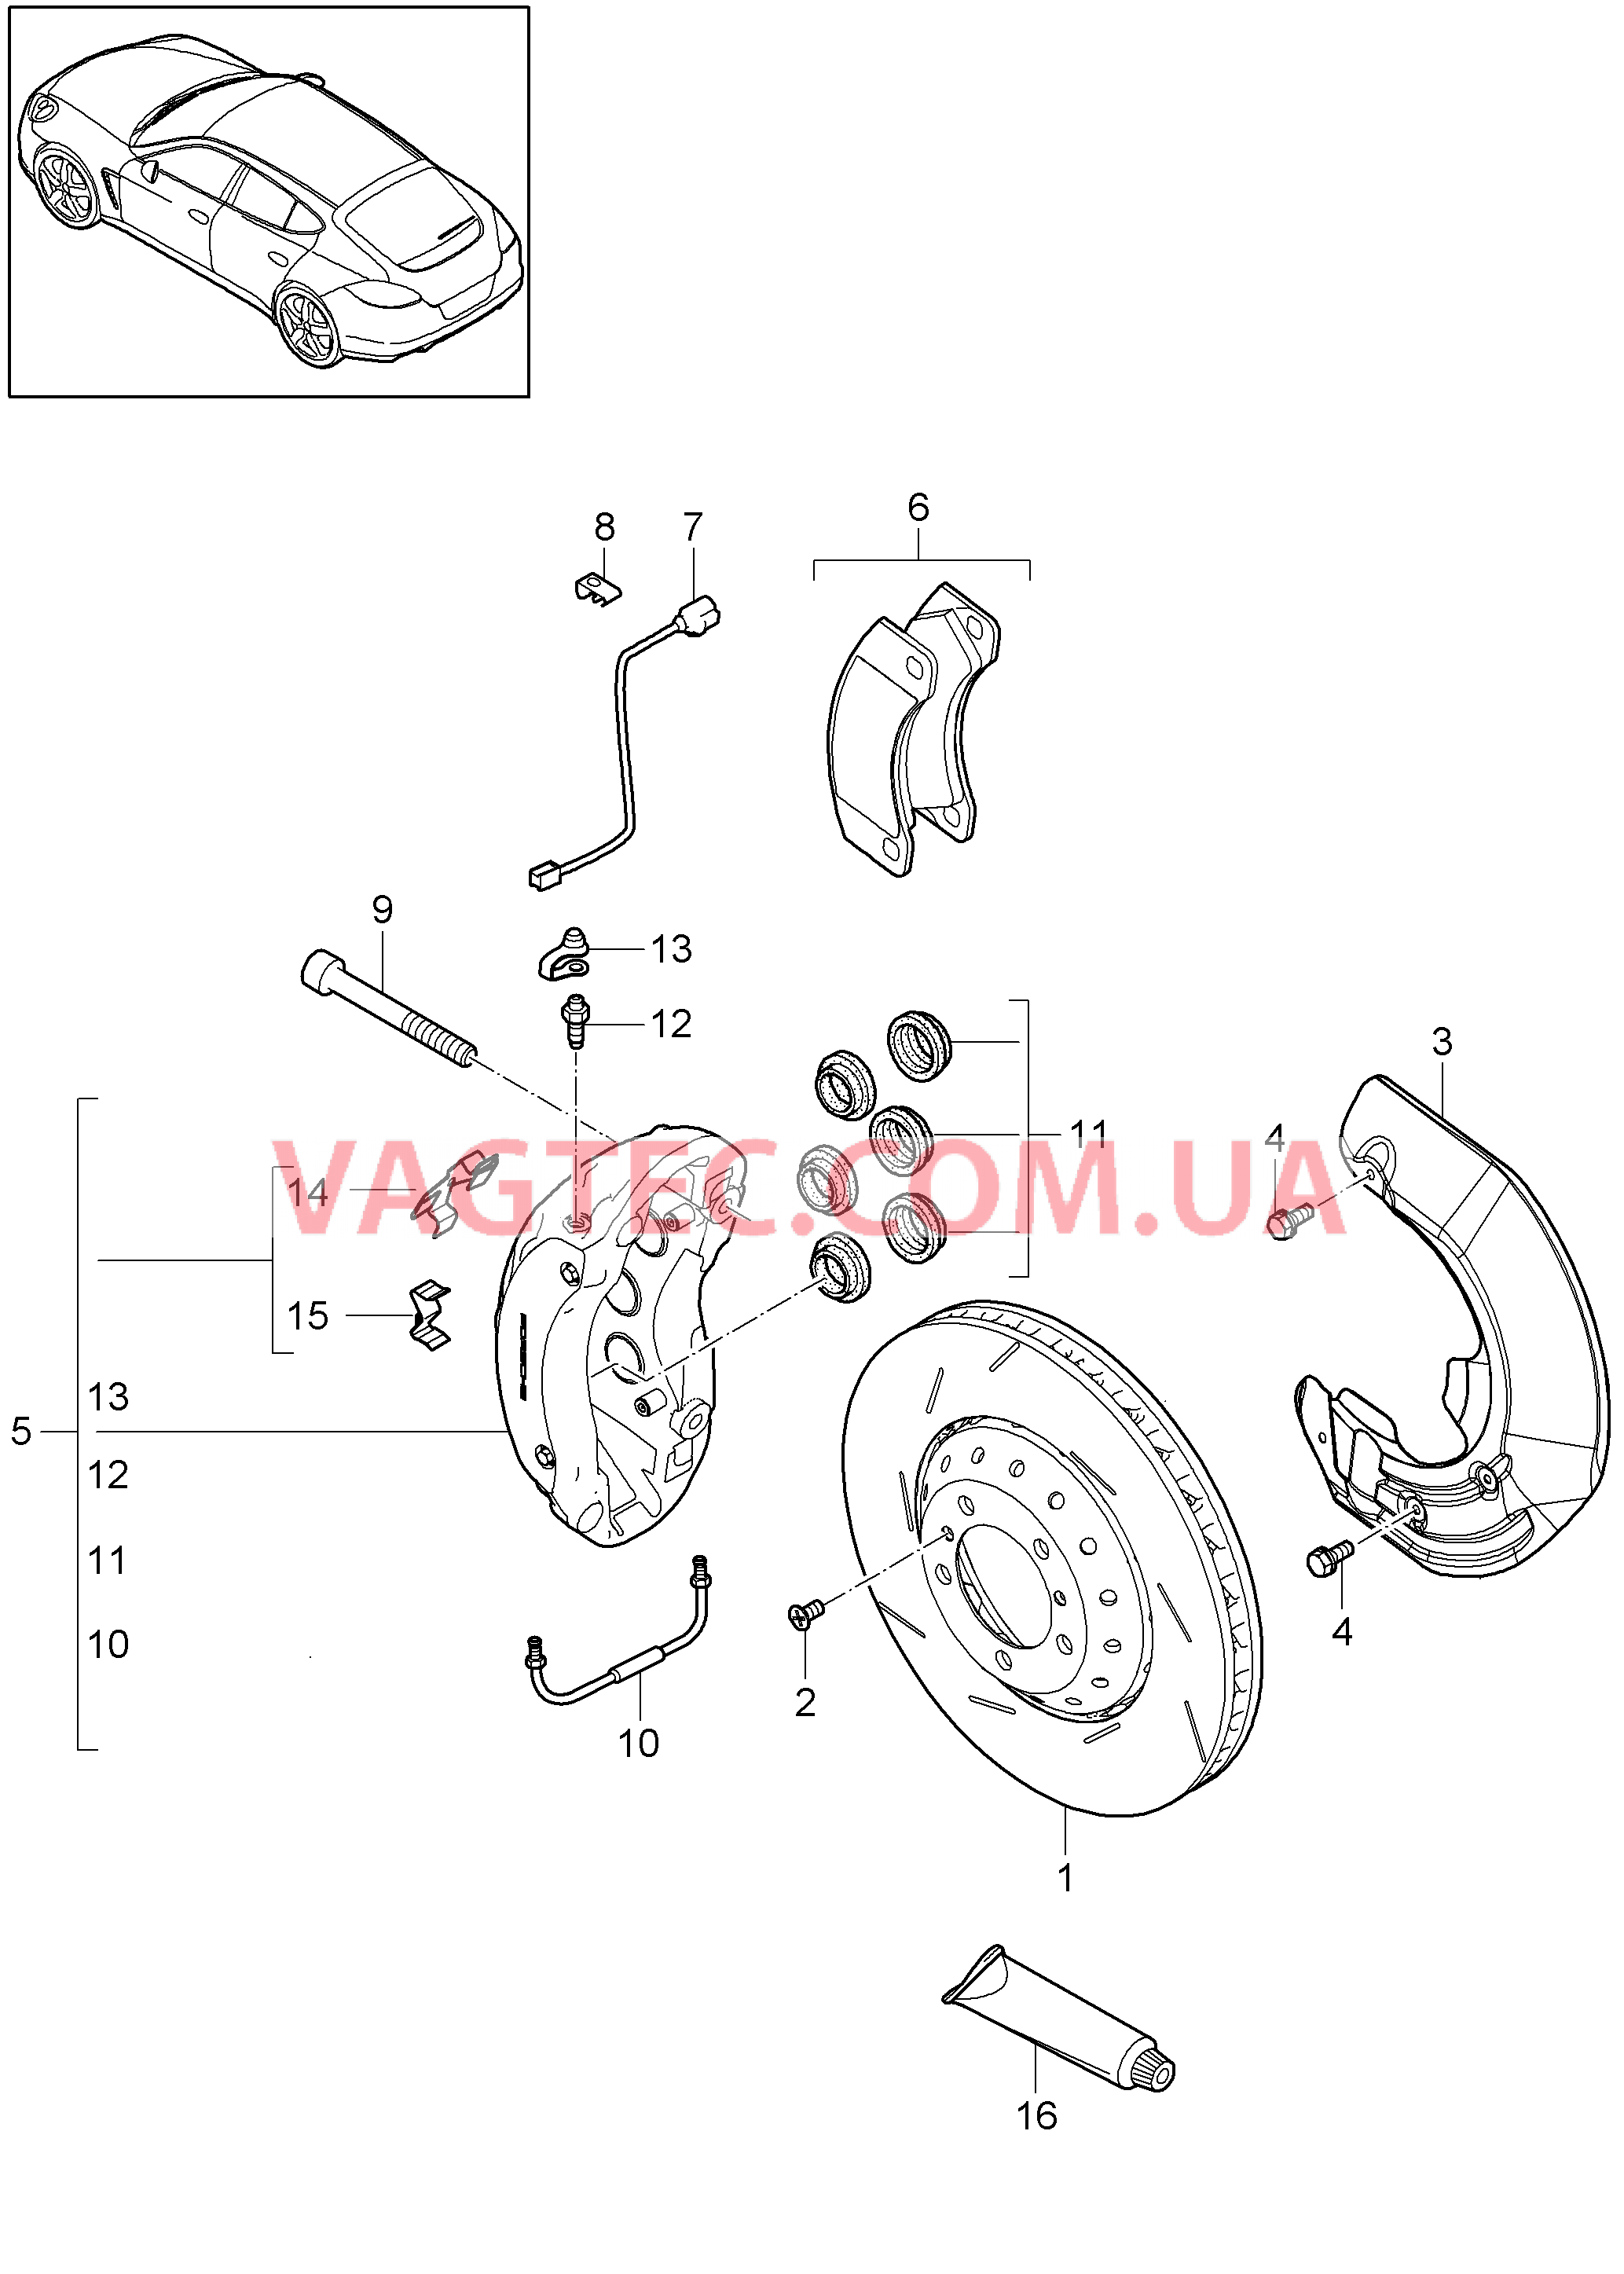 602-012 Дисковой тормоз, Передняя ось
						
						MCR.CB/CC, MCW.AA/FA/JA, MCG.EA/FA для PORSCHE Panamera 2010-2016USA